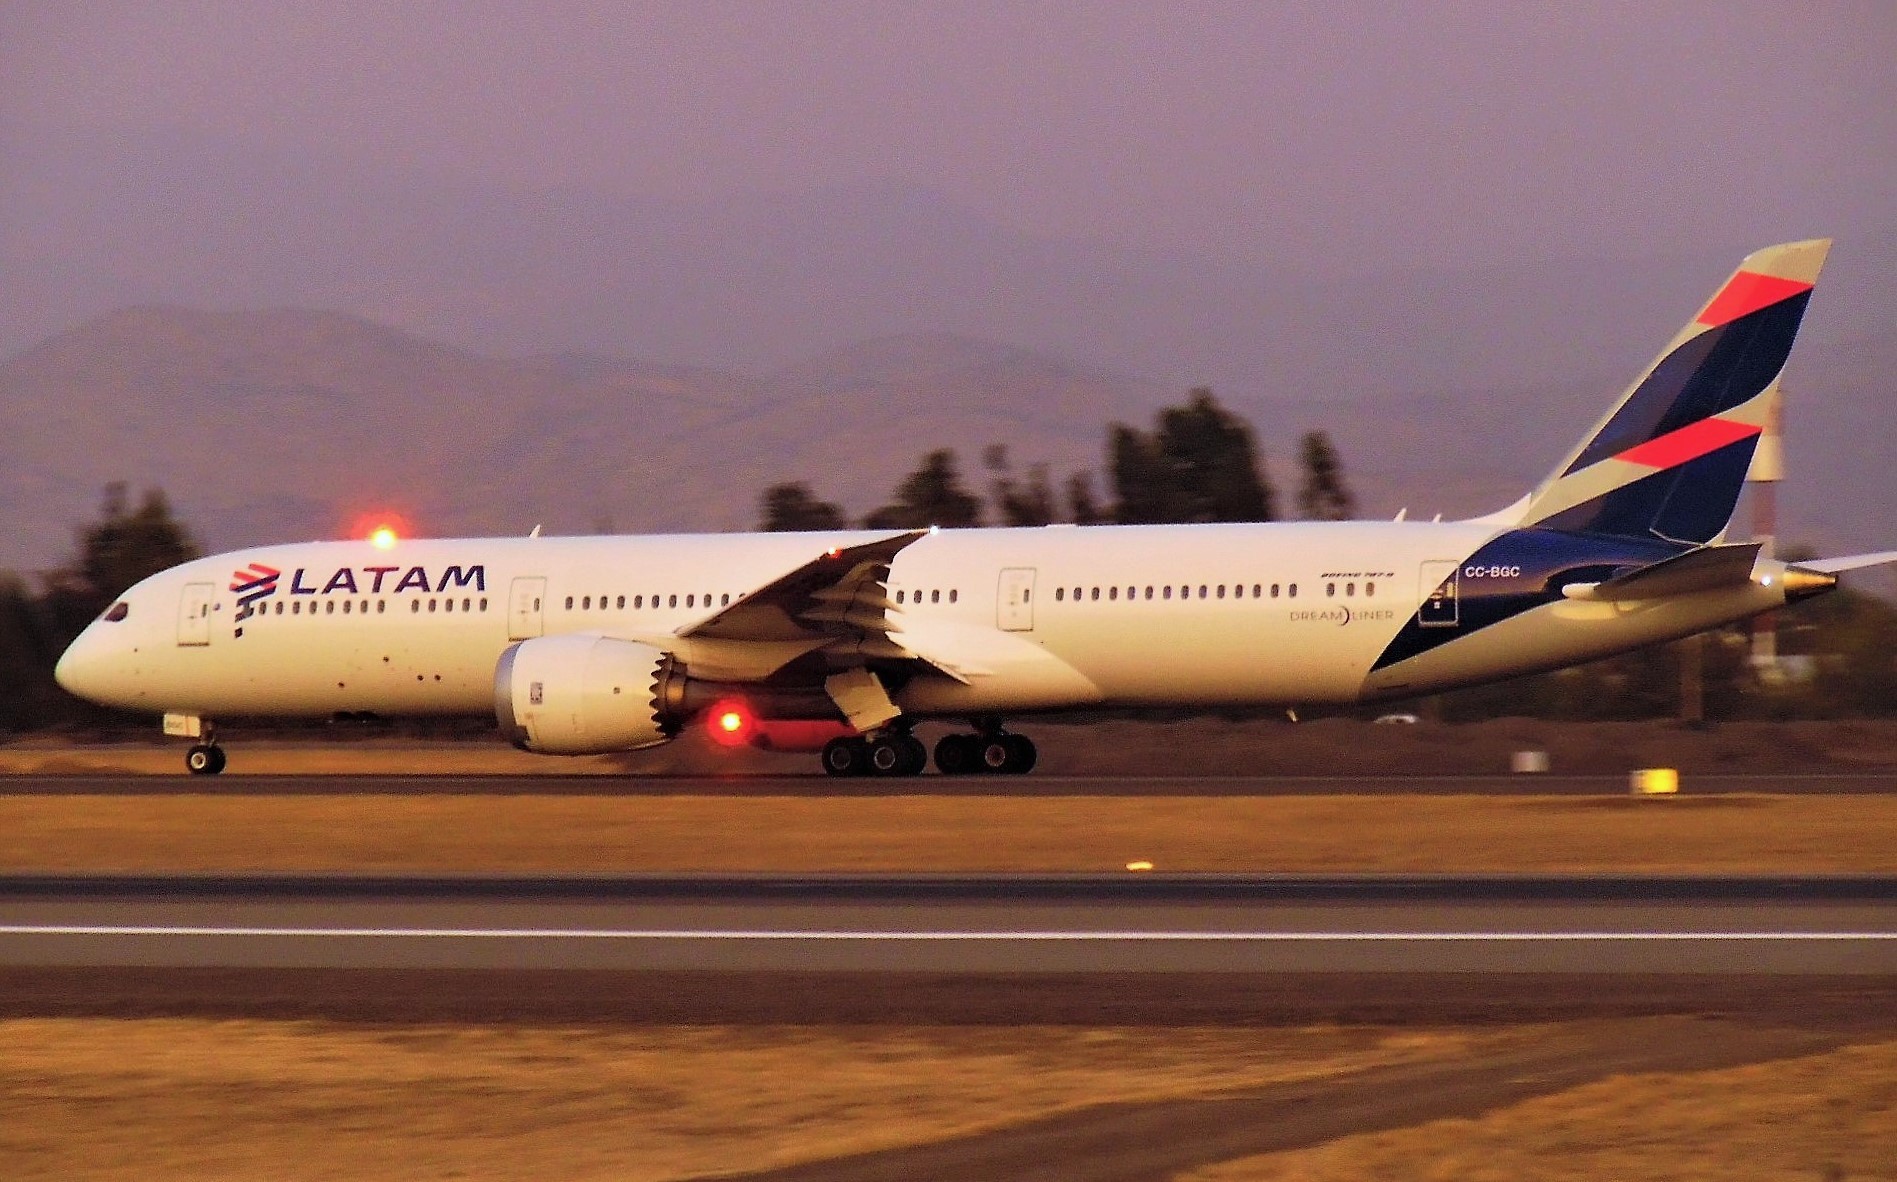 La red WI-FI; a bordo en LATAM Airlines Brasil